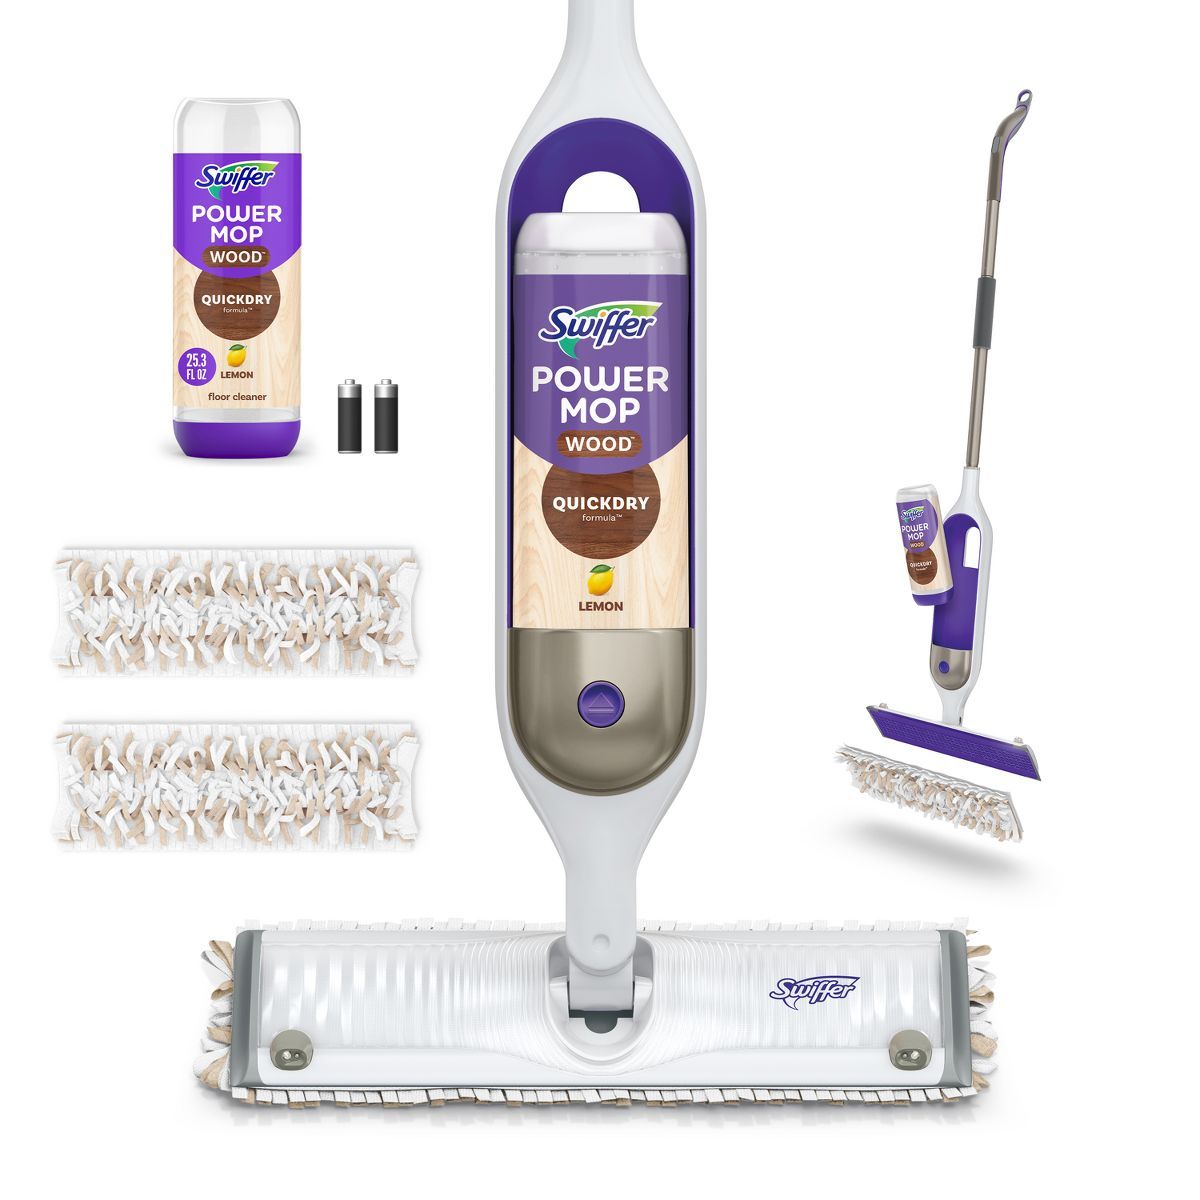 Swiffer Power Mop Wood Mop Kit for Wood Floor Cleaning | Target